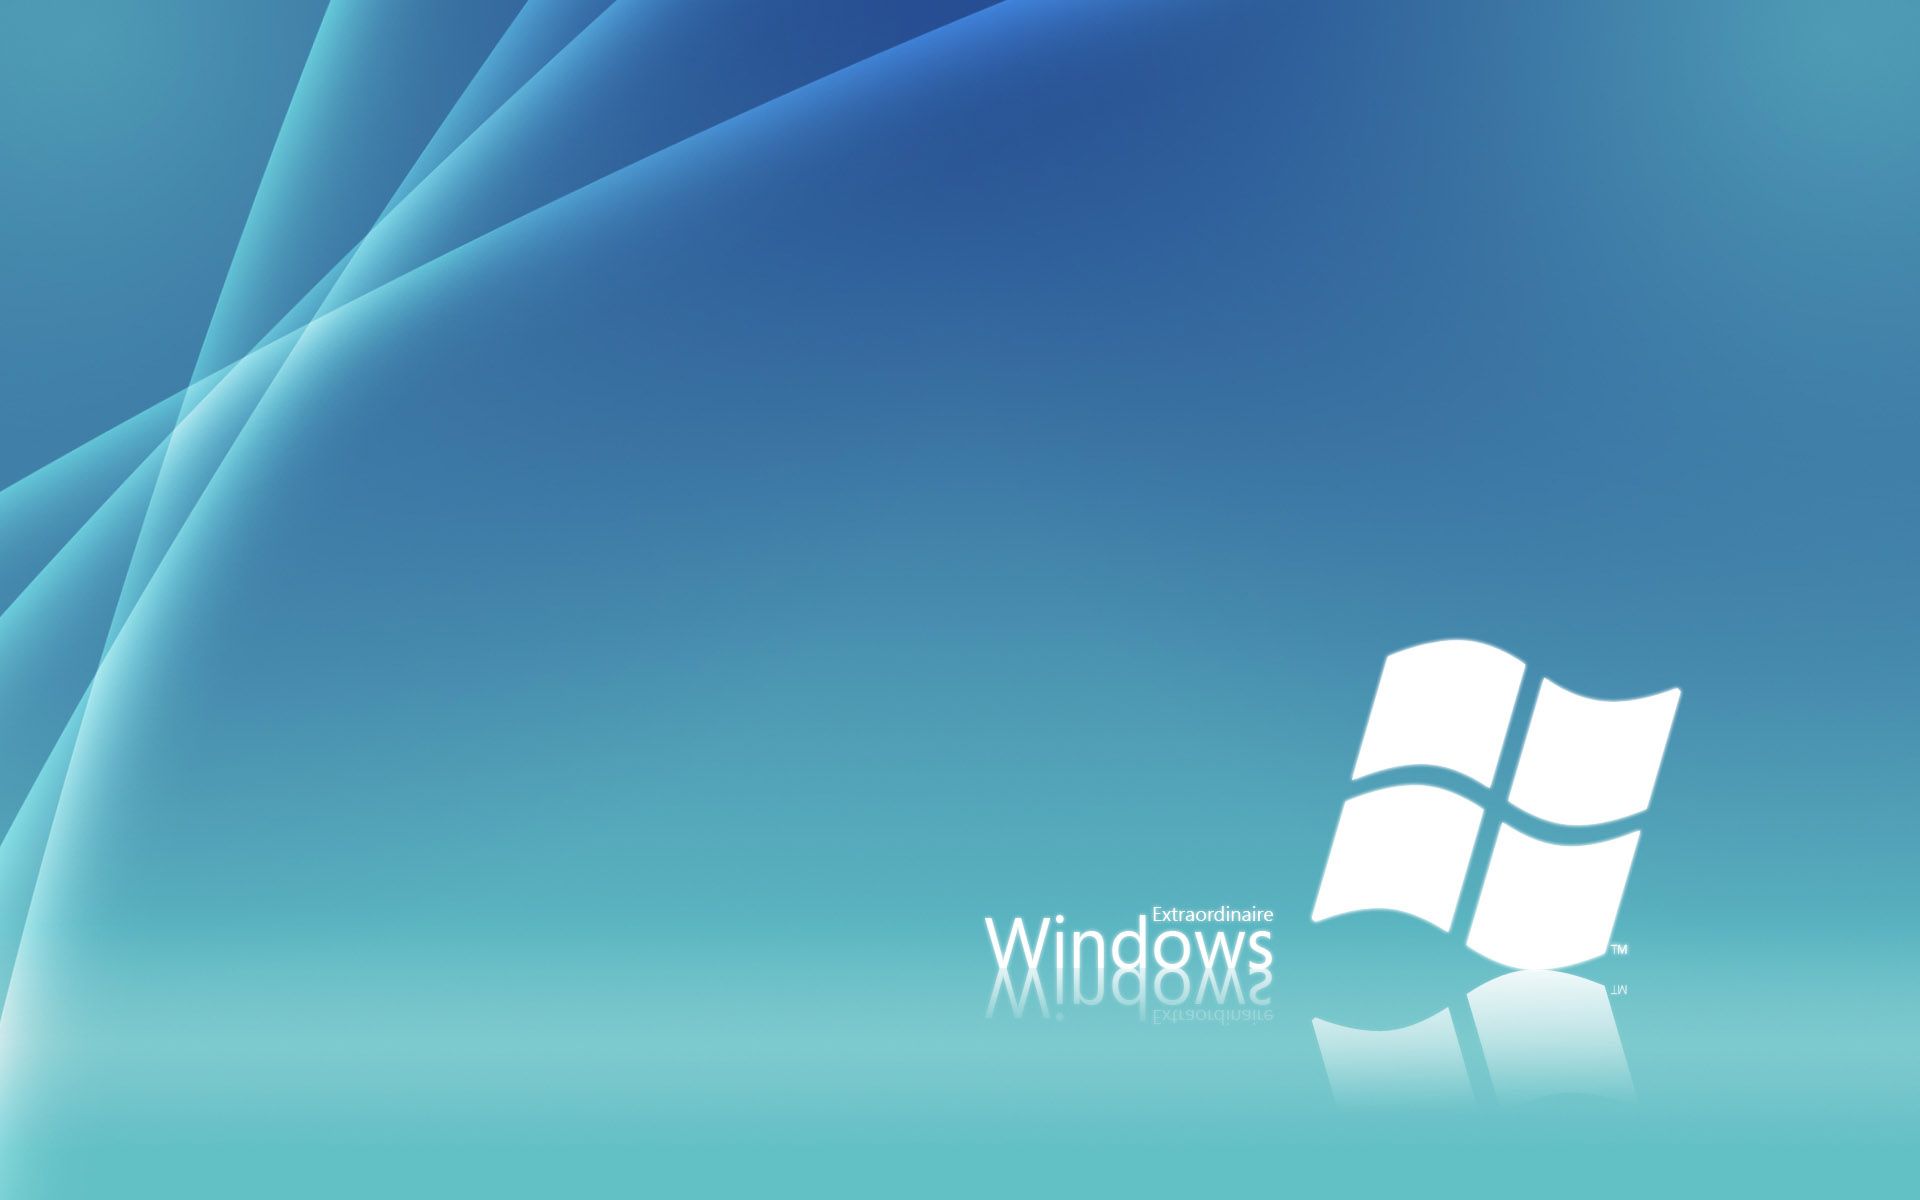 Microsoft Windows 7 HD Picture Wallpaper 1061 - Amazing Wallpaperz